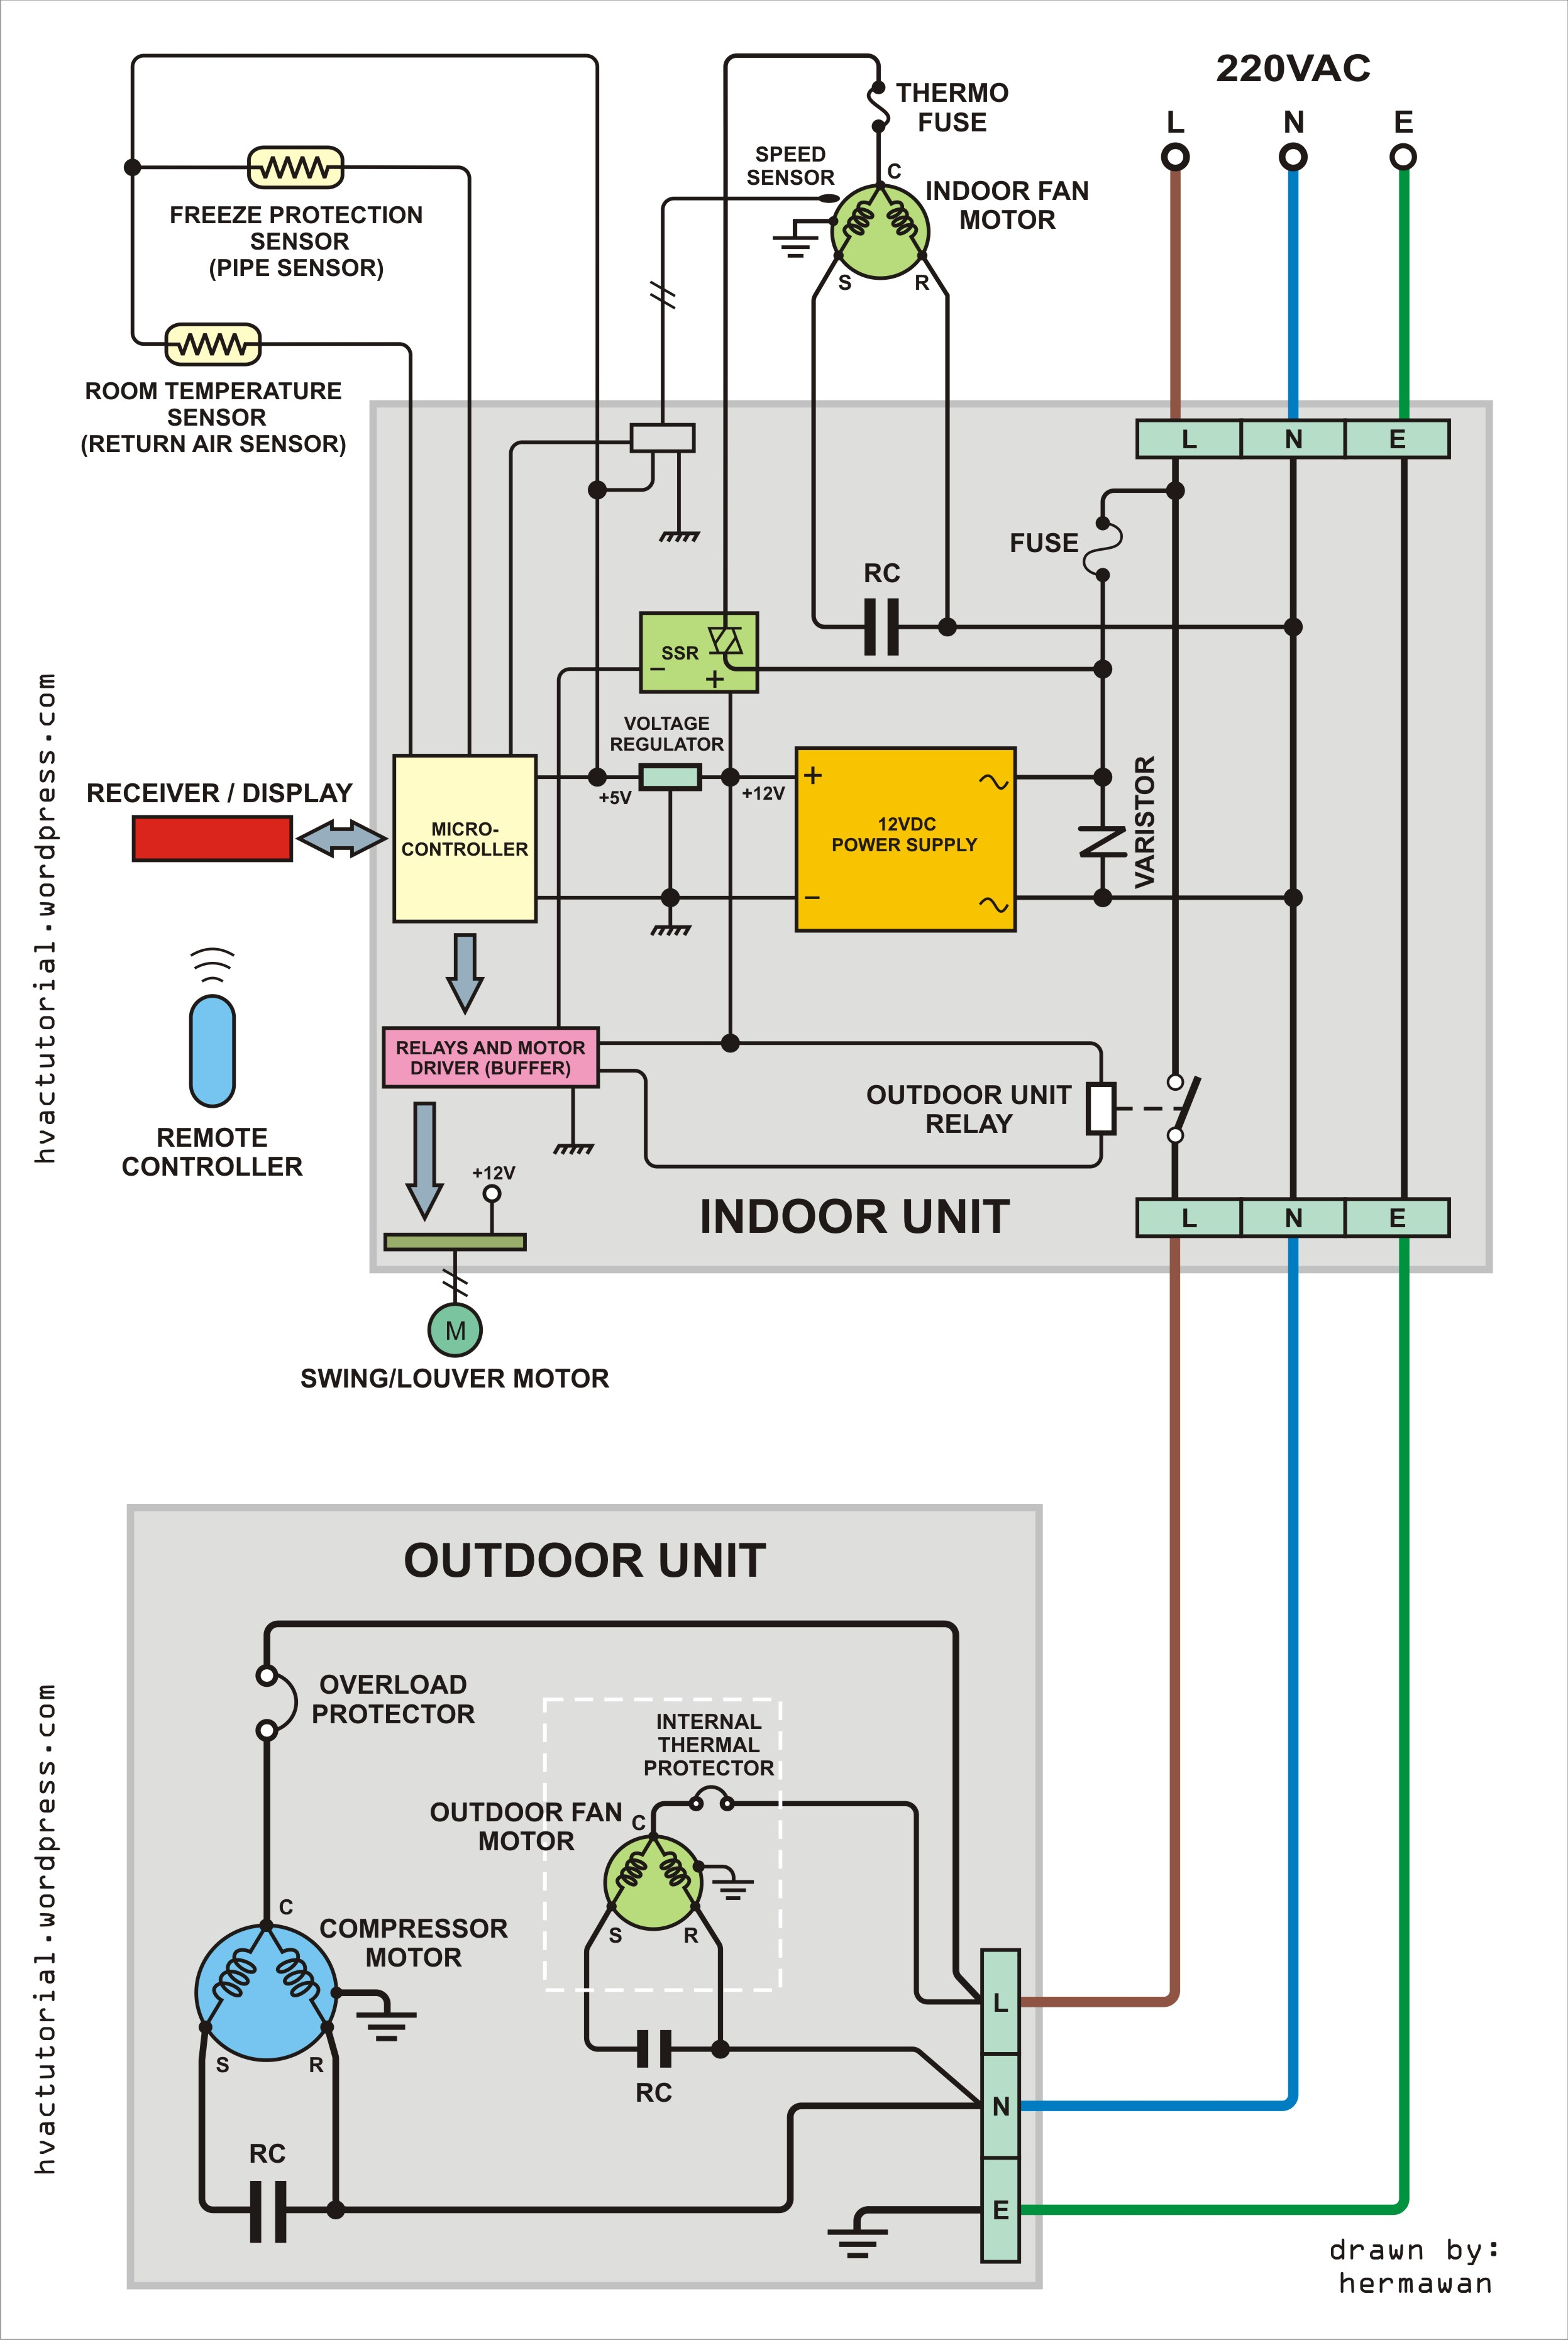 Wiring Diagram For Air Compressor Motor - Wiring Diagram